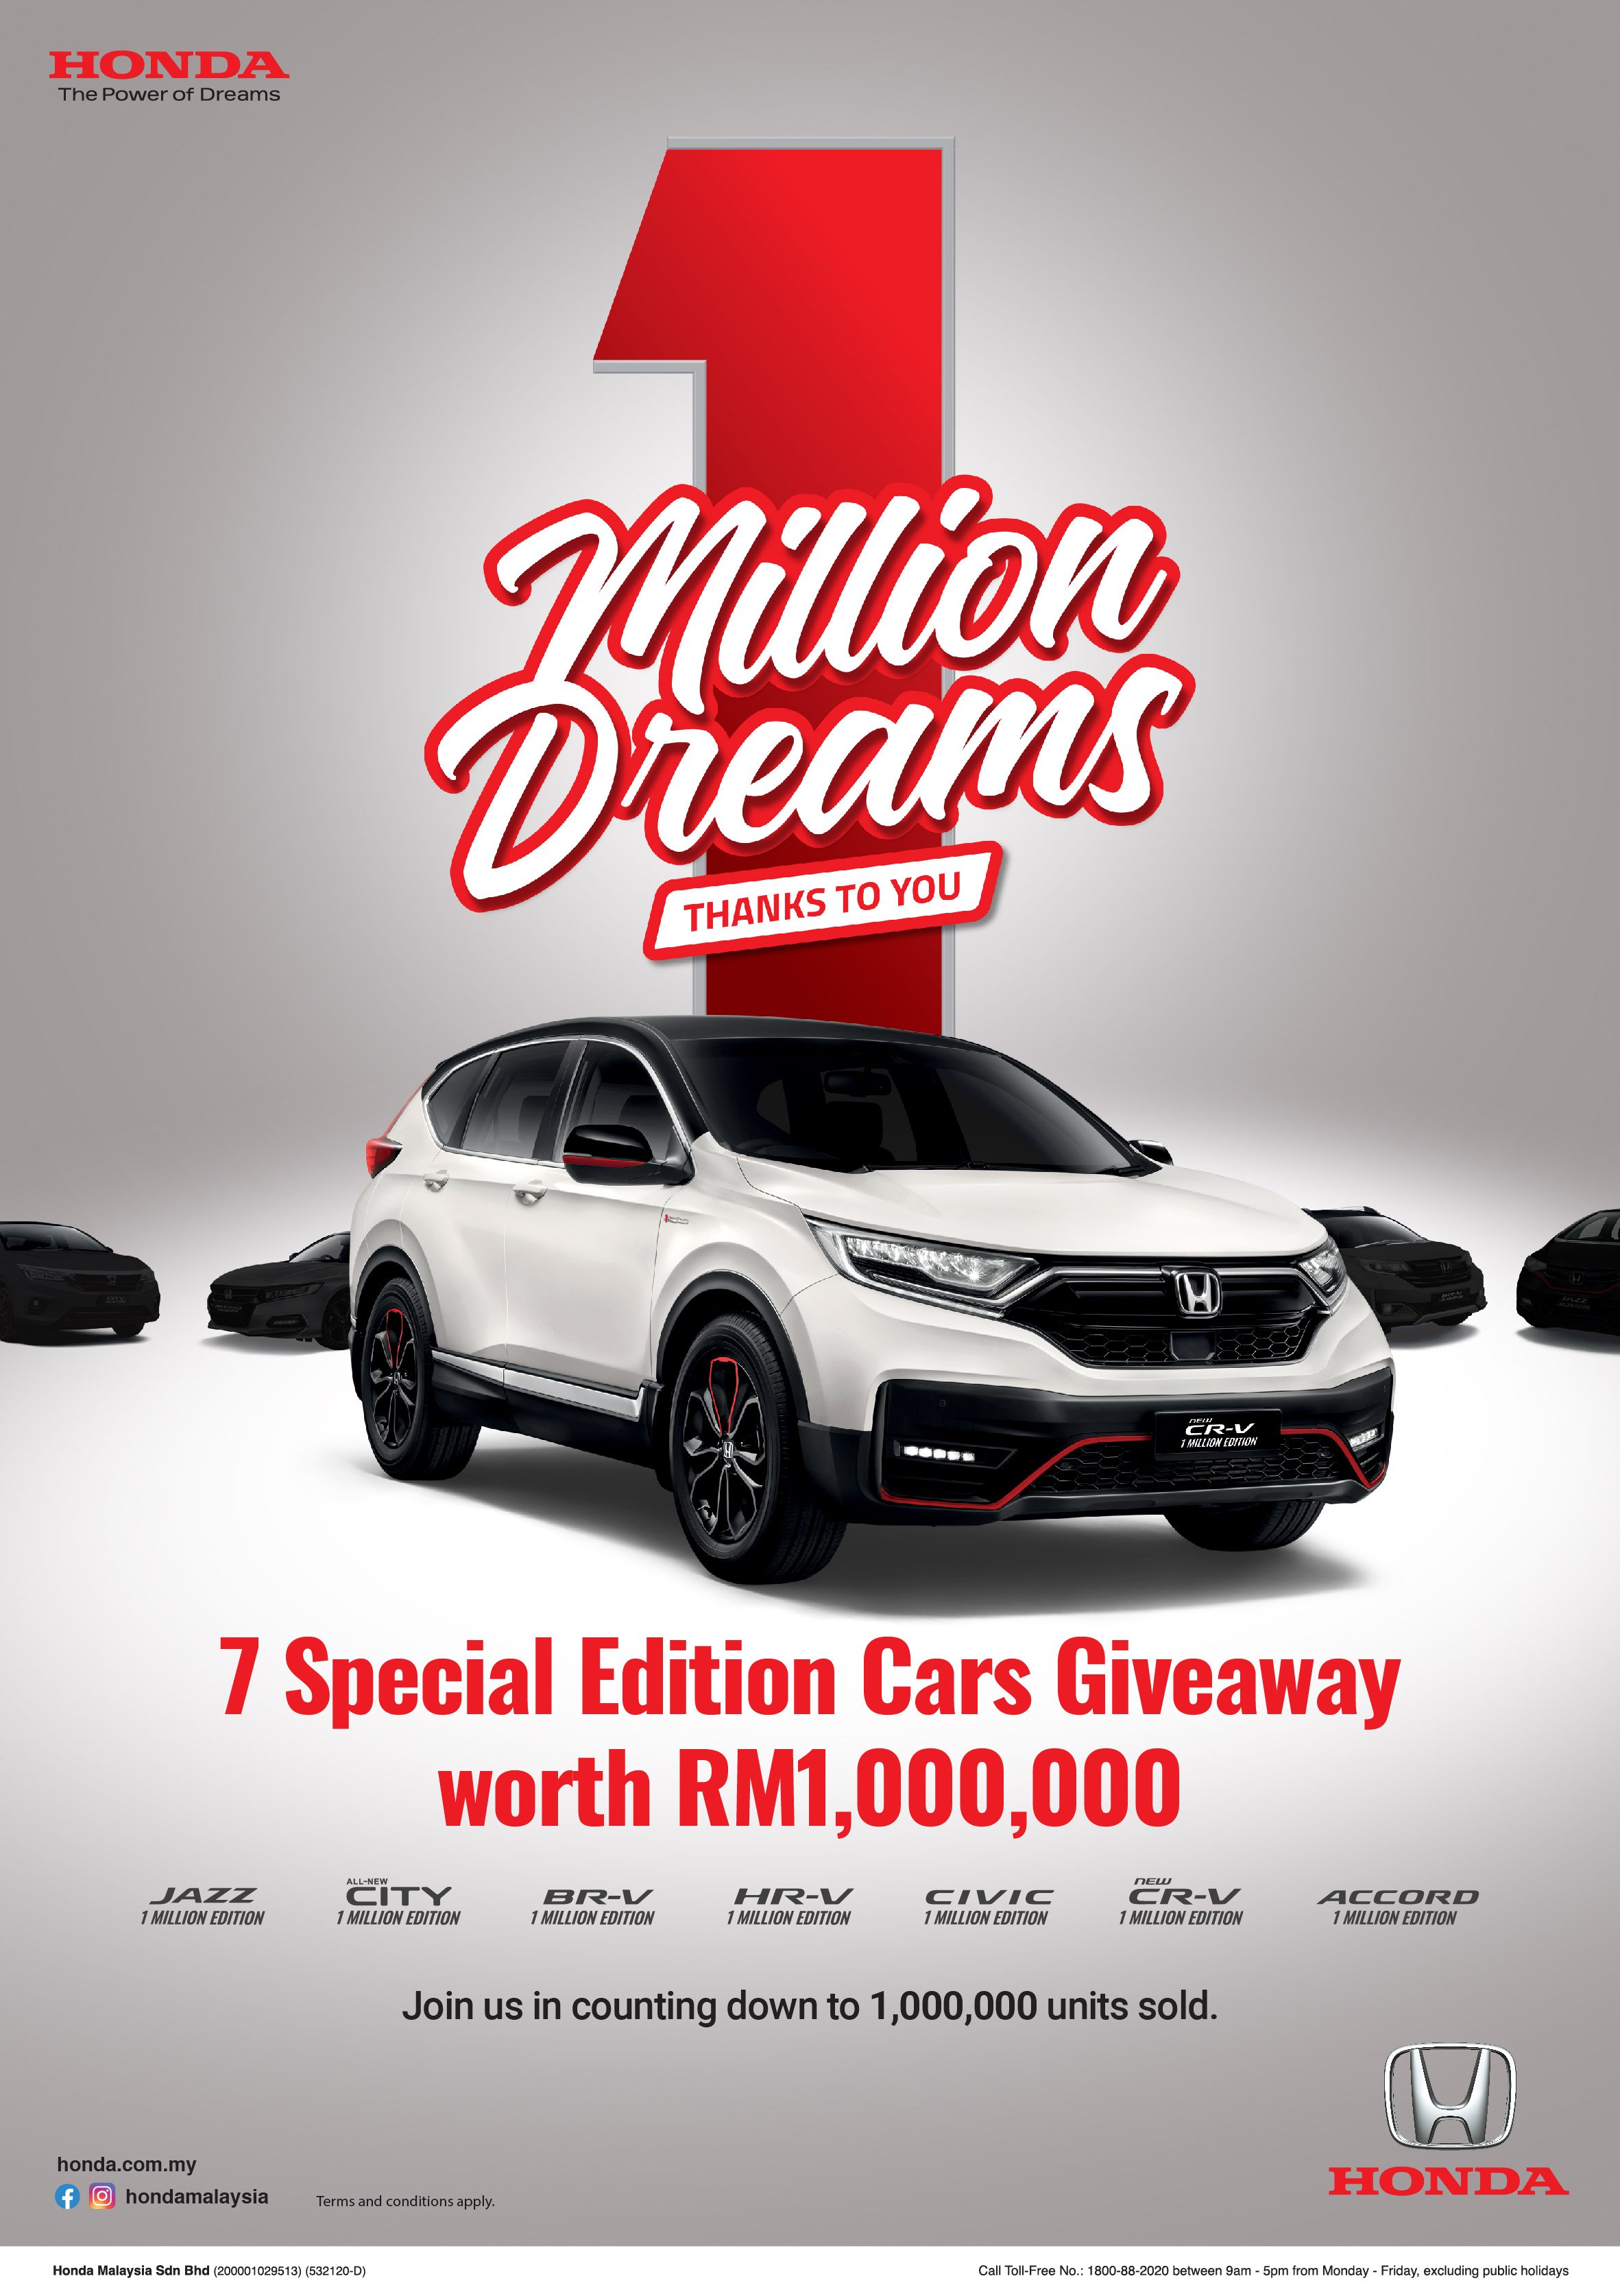 Honda Malaysia Celebrates The Journey Of Reaching 1 Millionth Unit Sales Milestone With Malaysians - thumbnail